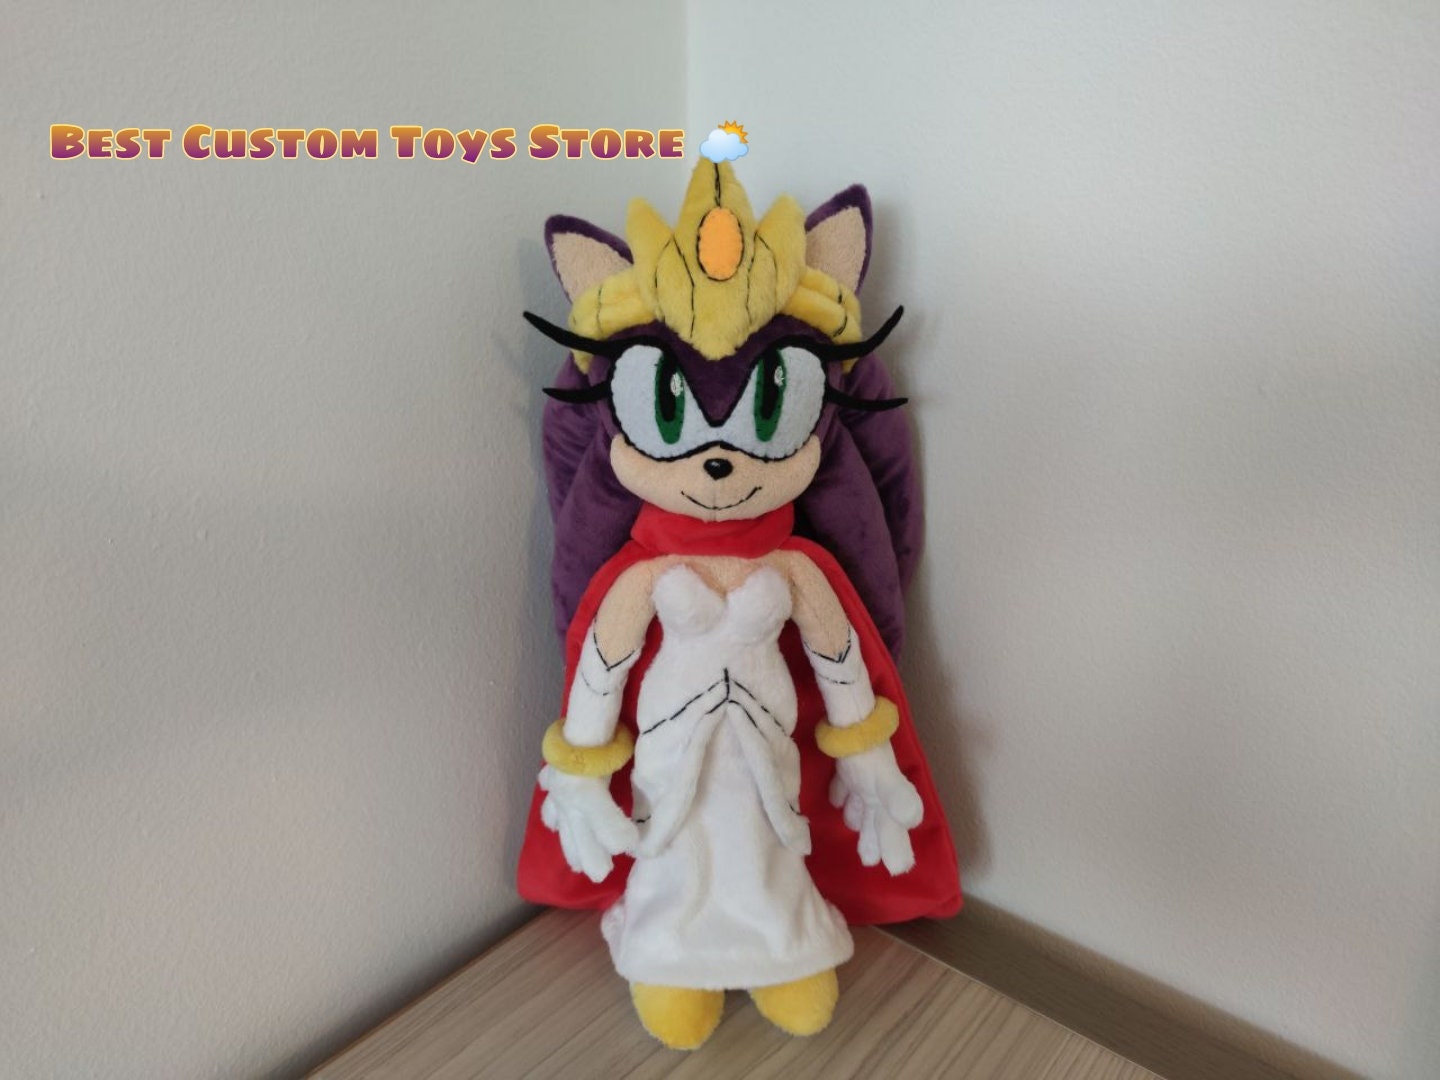 Sonic The Hedgehog Figura de acción de 4 pulgadas Amy moderna con martillo  juguete coleccionable